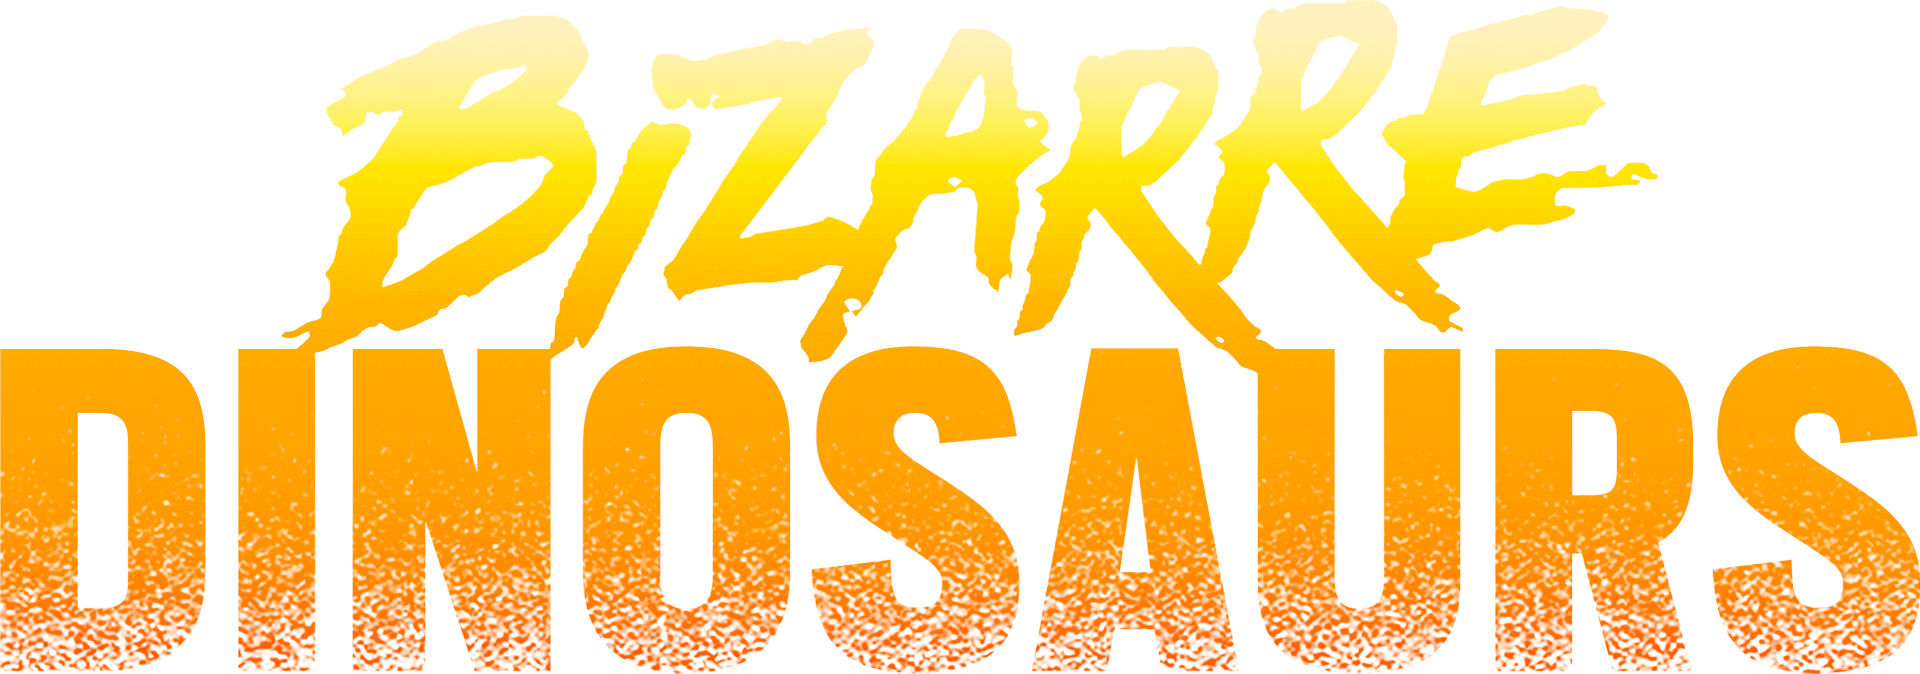 Bizarre Dinosaurs logo